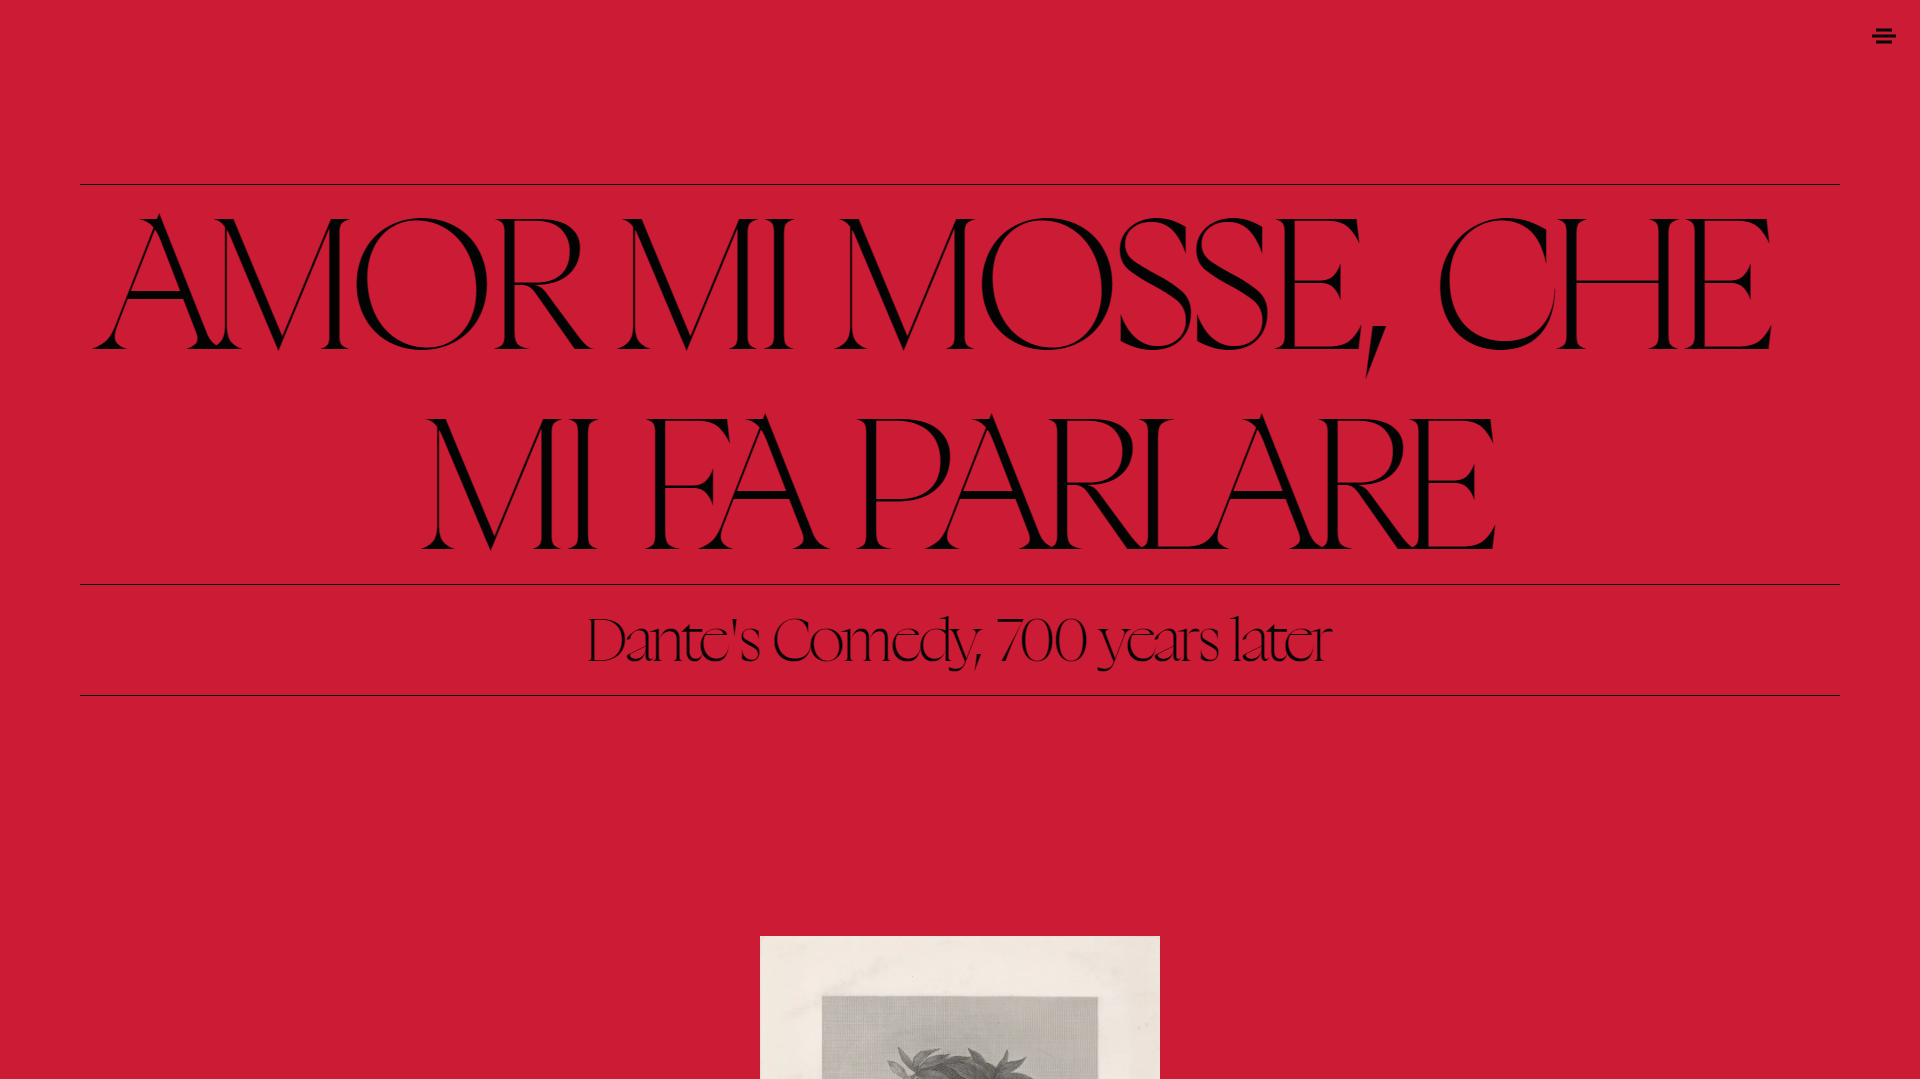 Typography Inspiration In Web Design - Dante